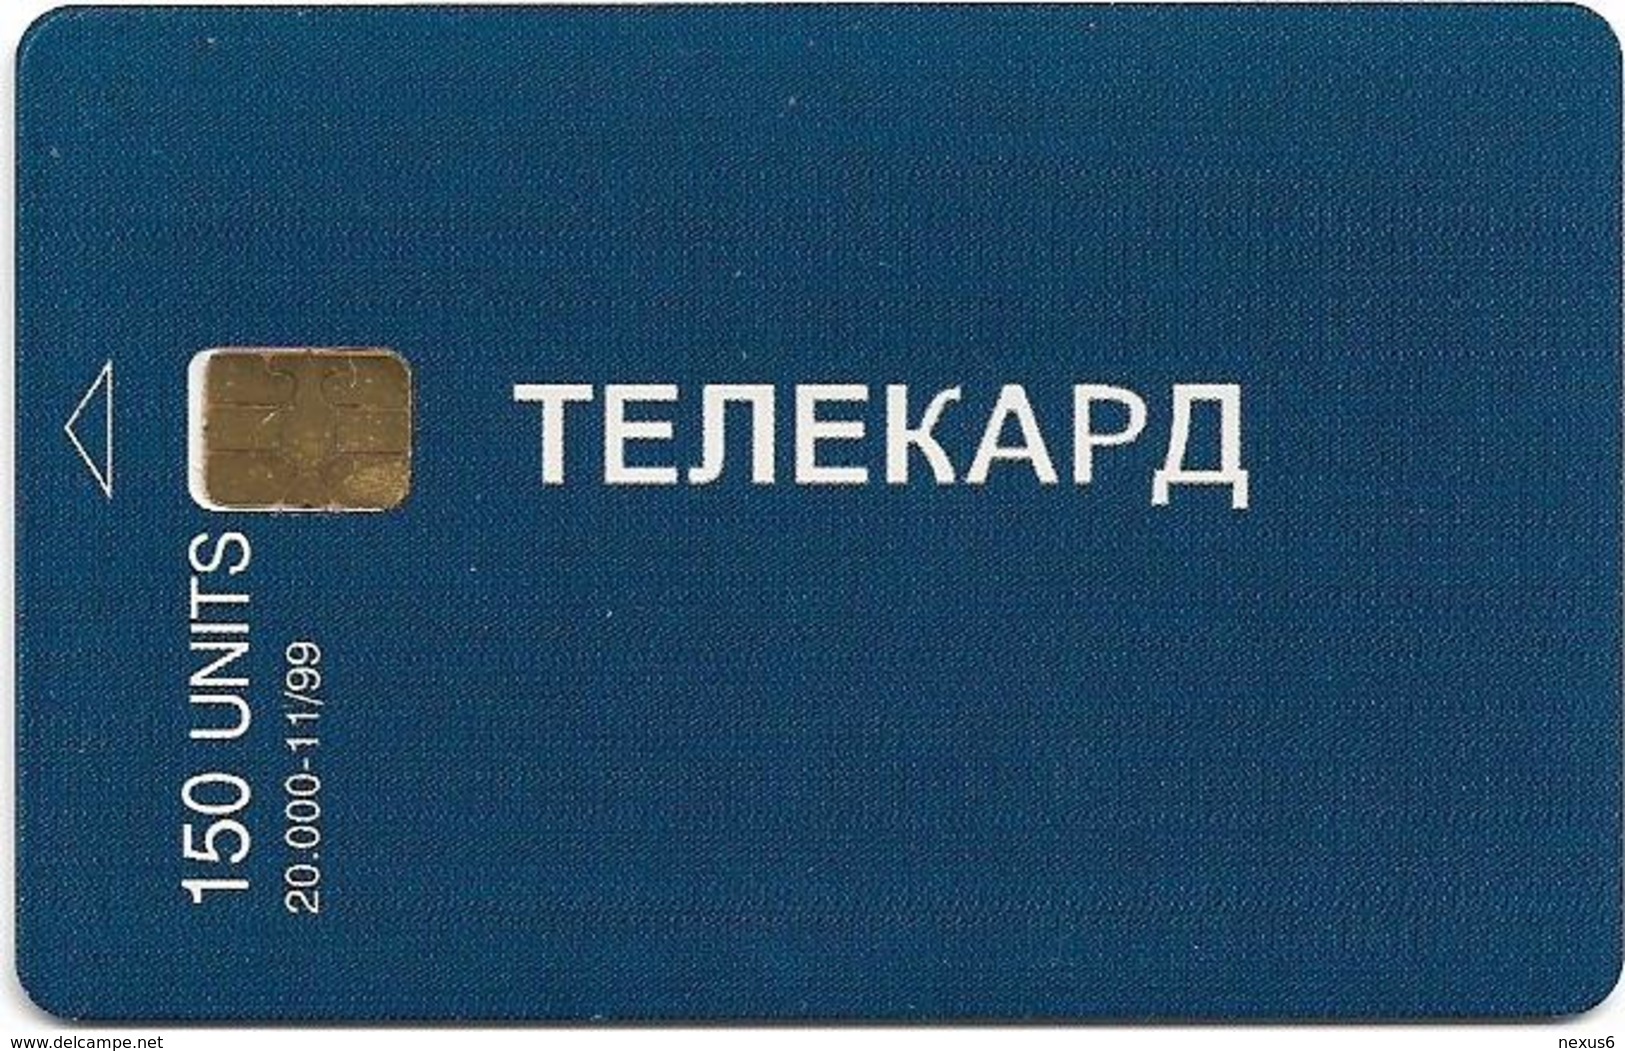 Banja Luka (Bosnia) - Republika Srpska - Blue Card 150 Units, 11.1999, 20.000ex, Sample (No Serial) - Bosnia